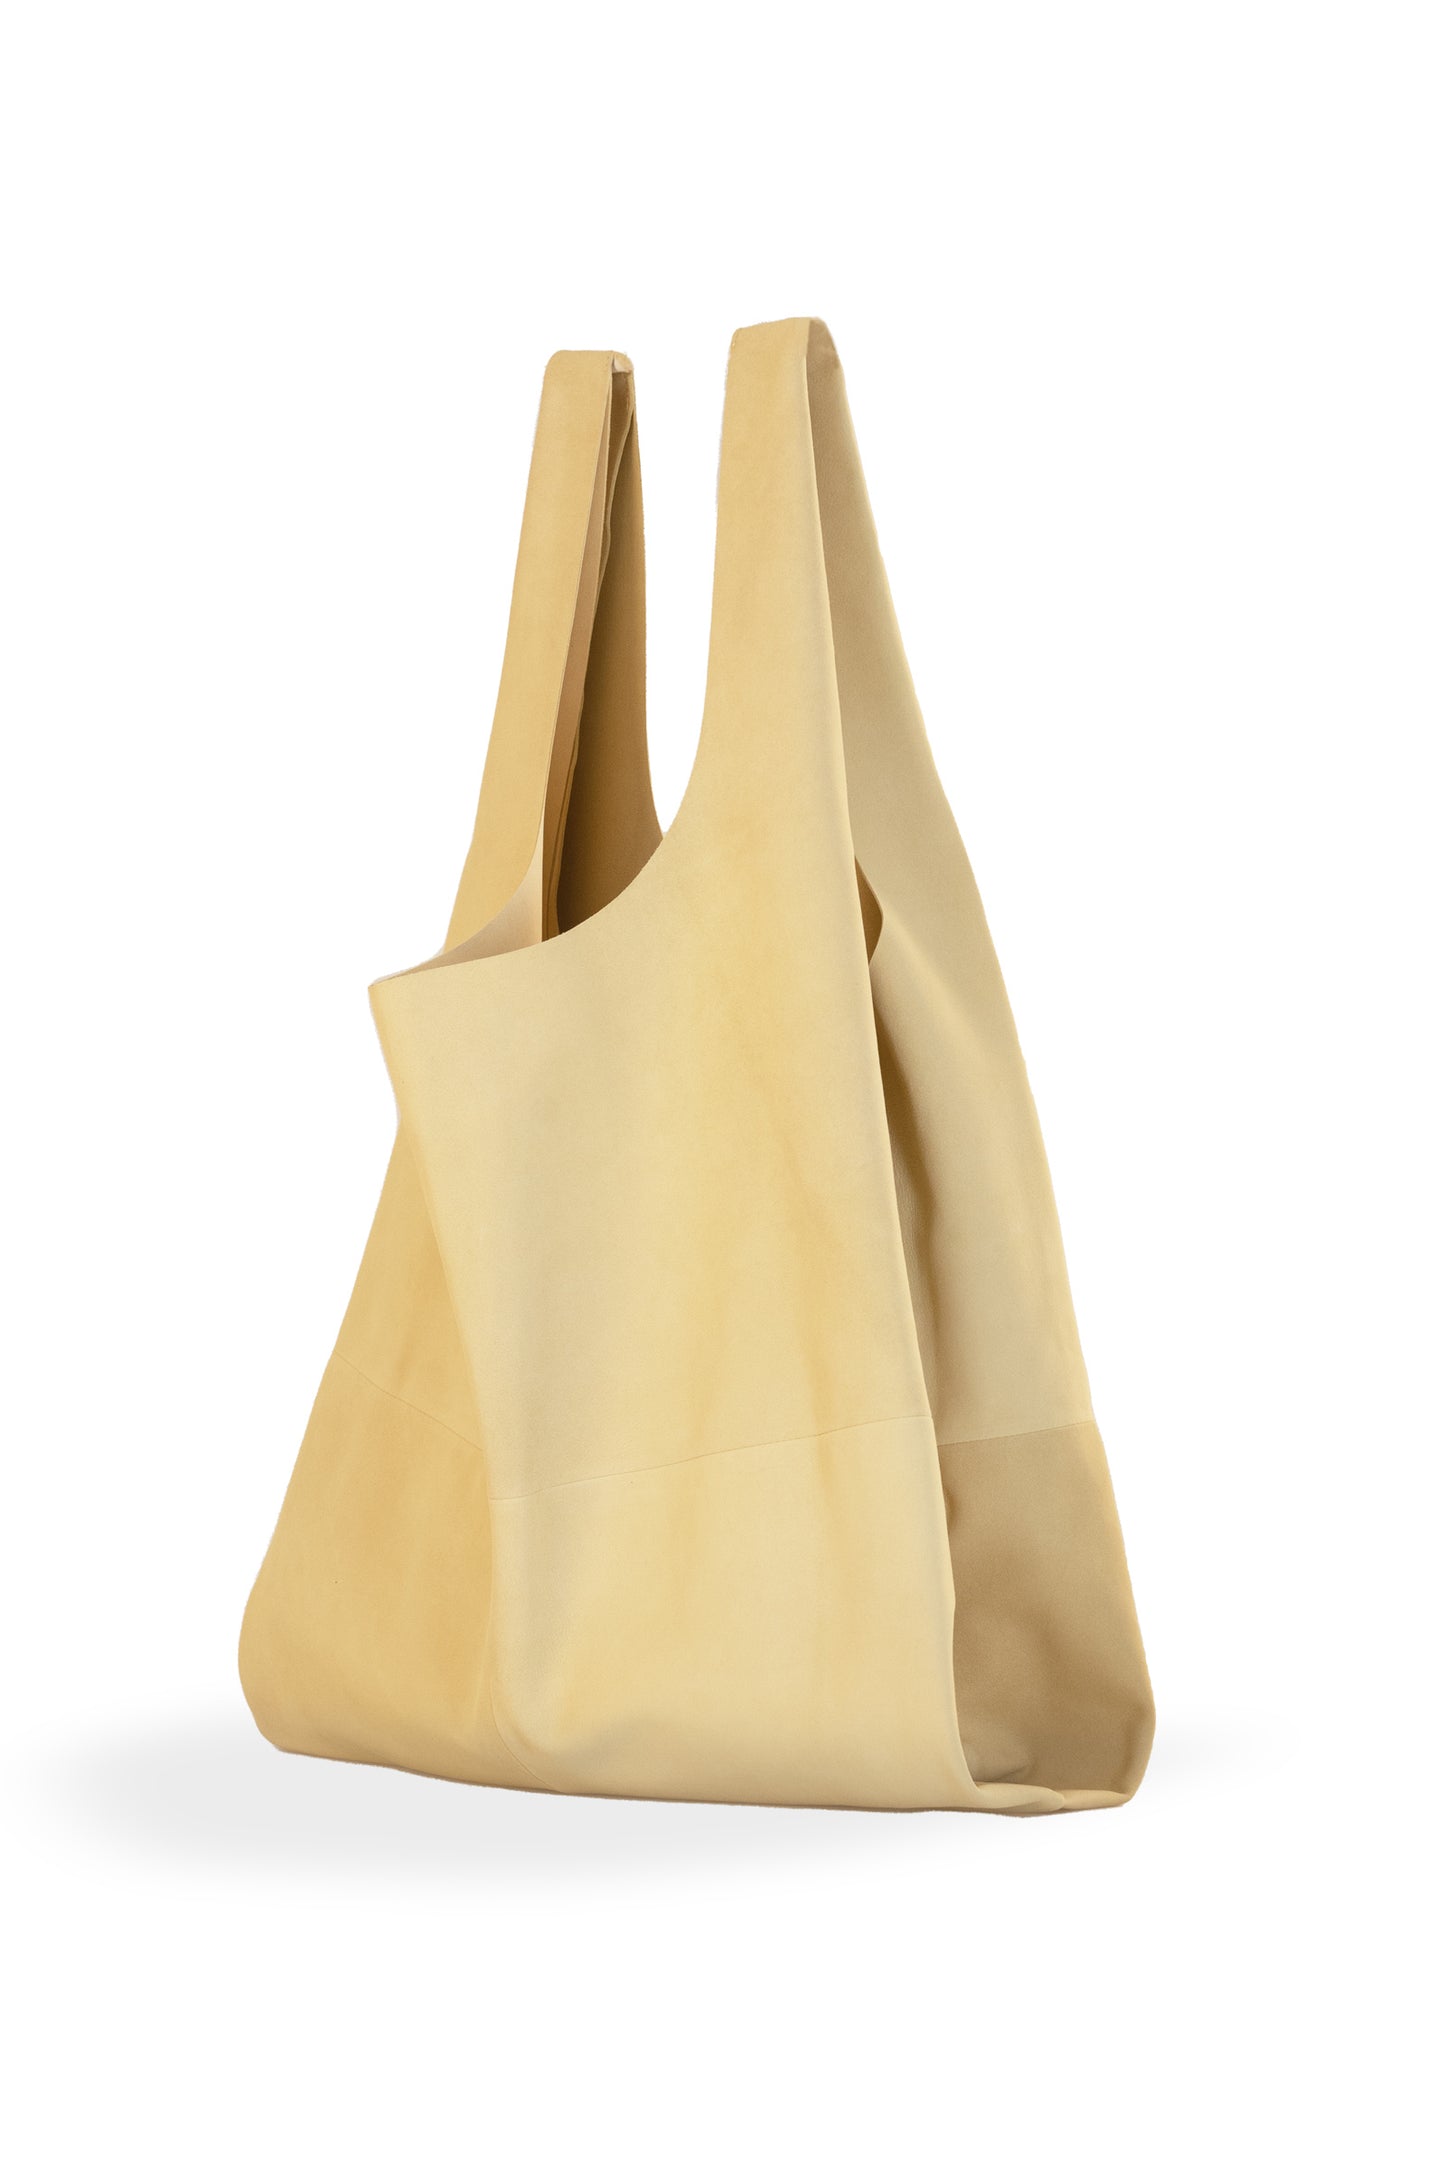 U XL, bag in light yellow suede